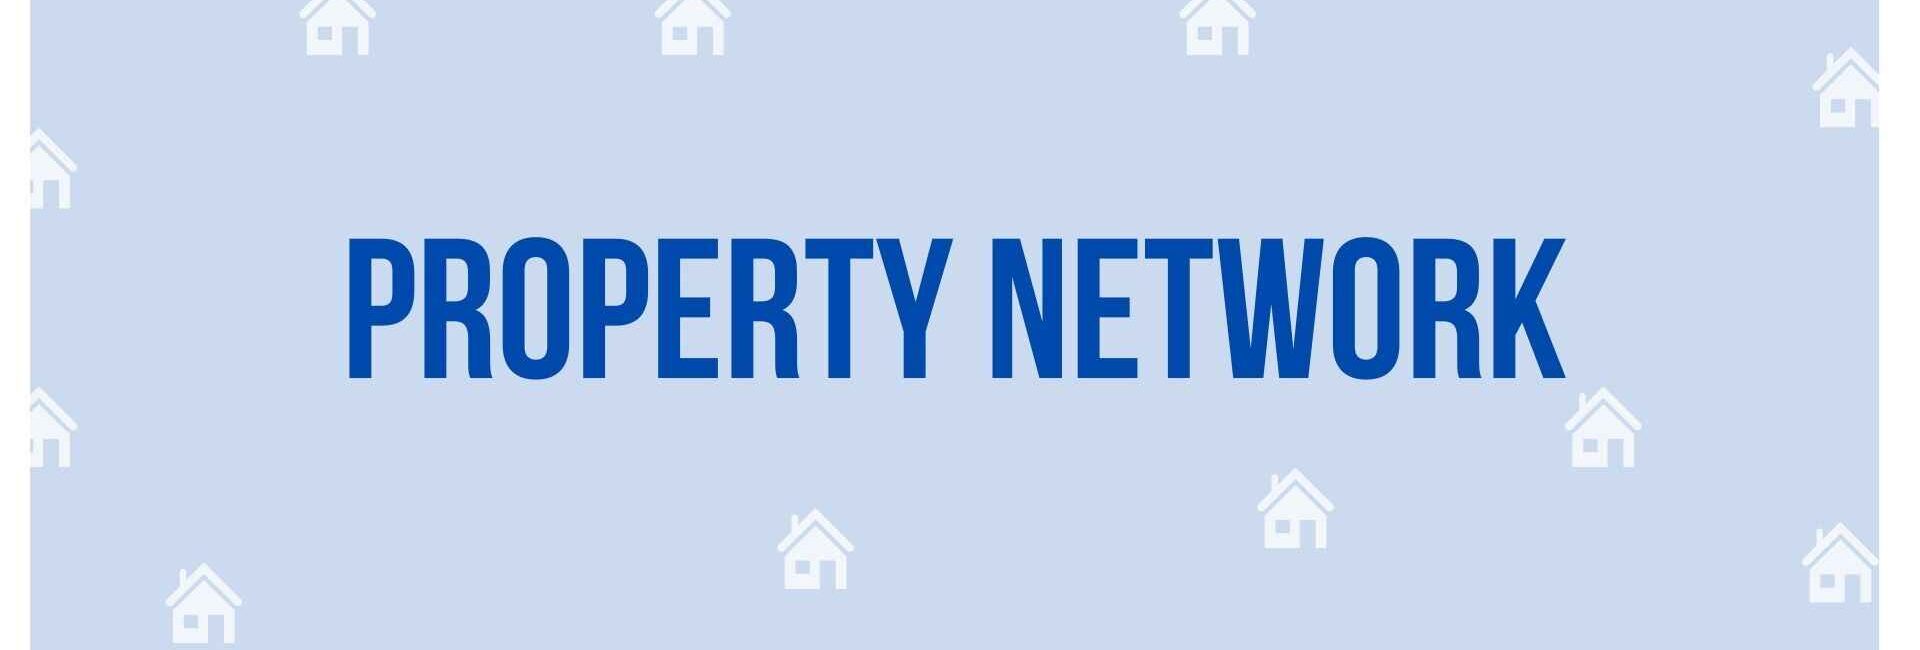 Property Network - Property Dealer in Noida